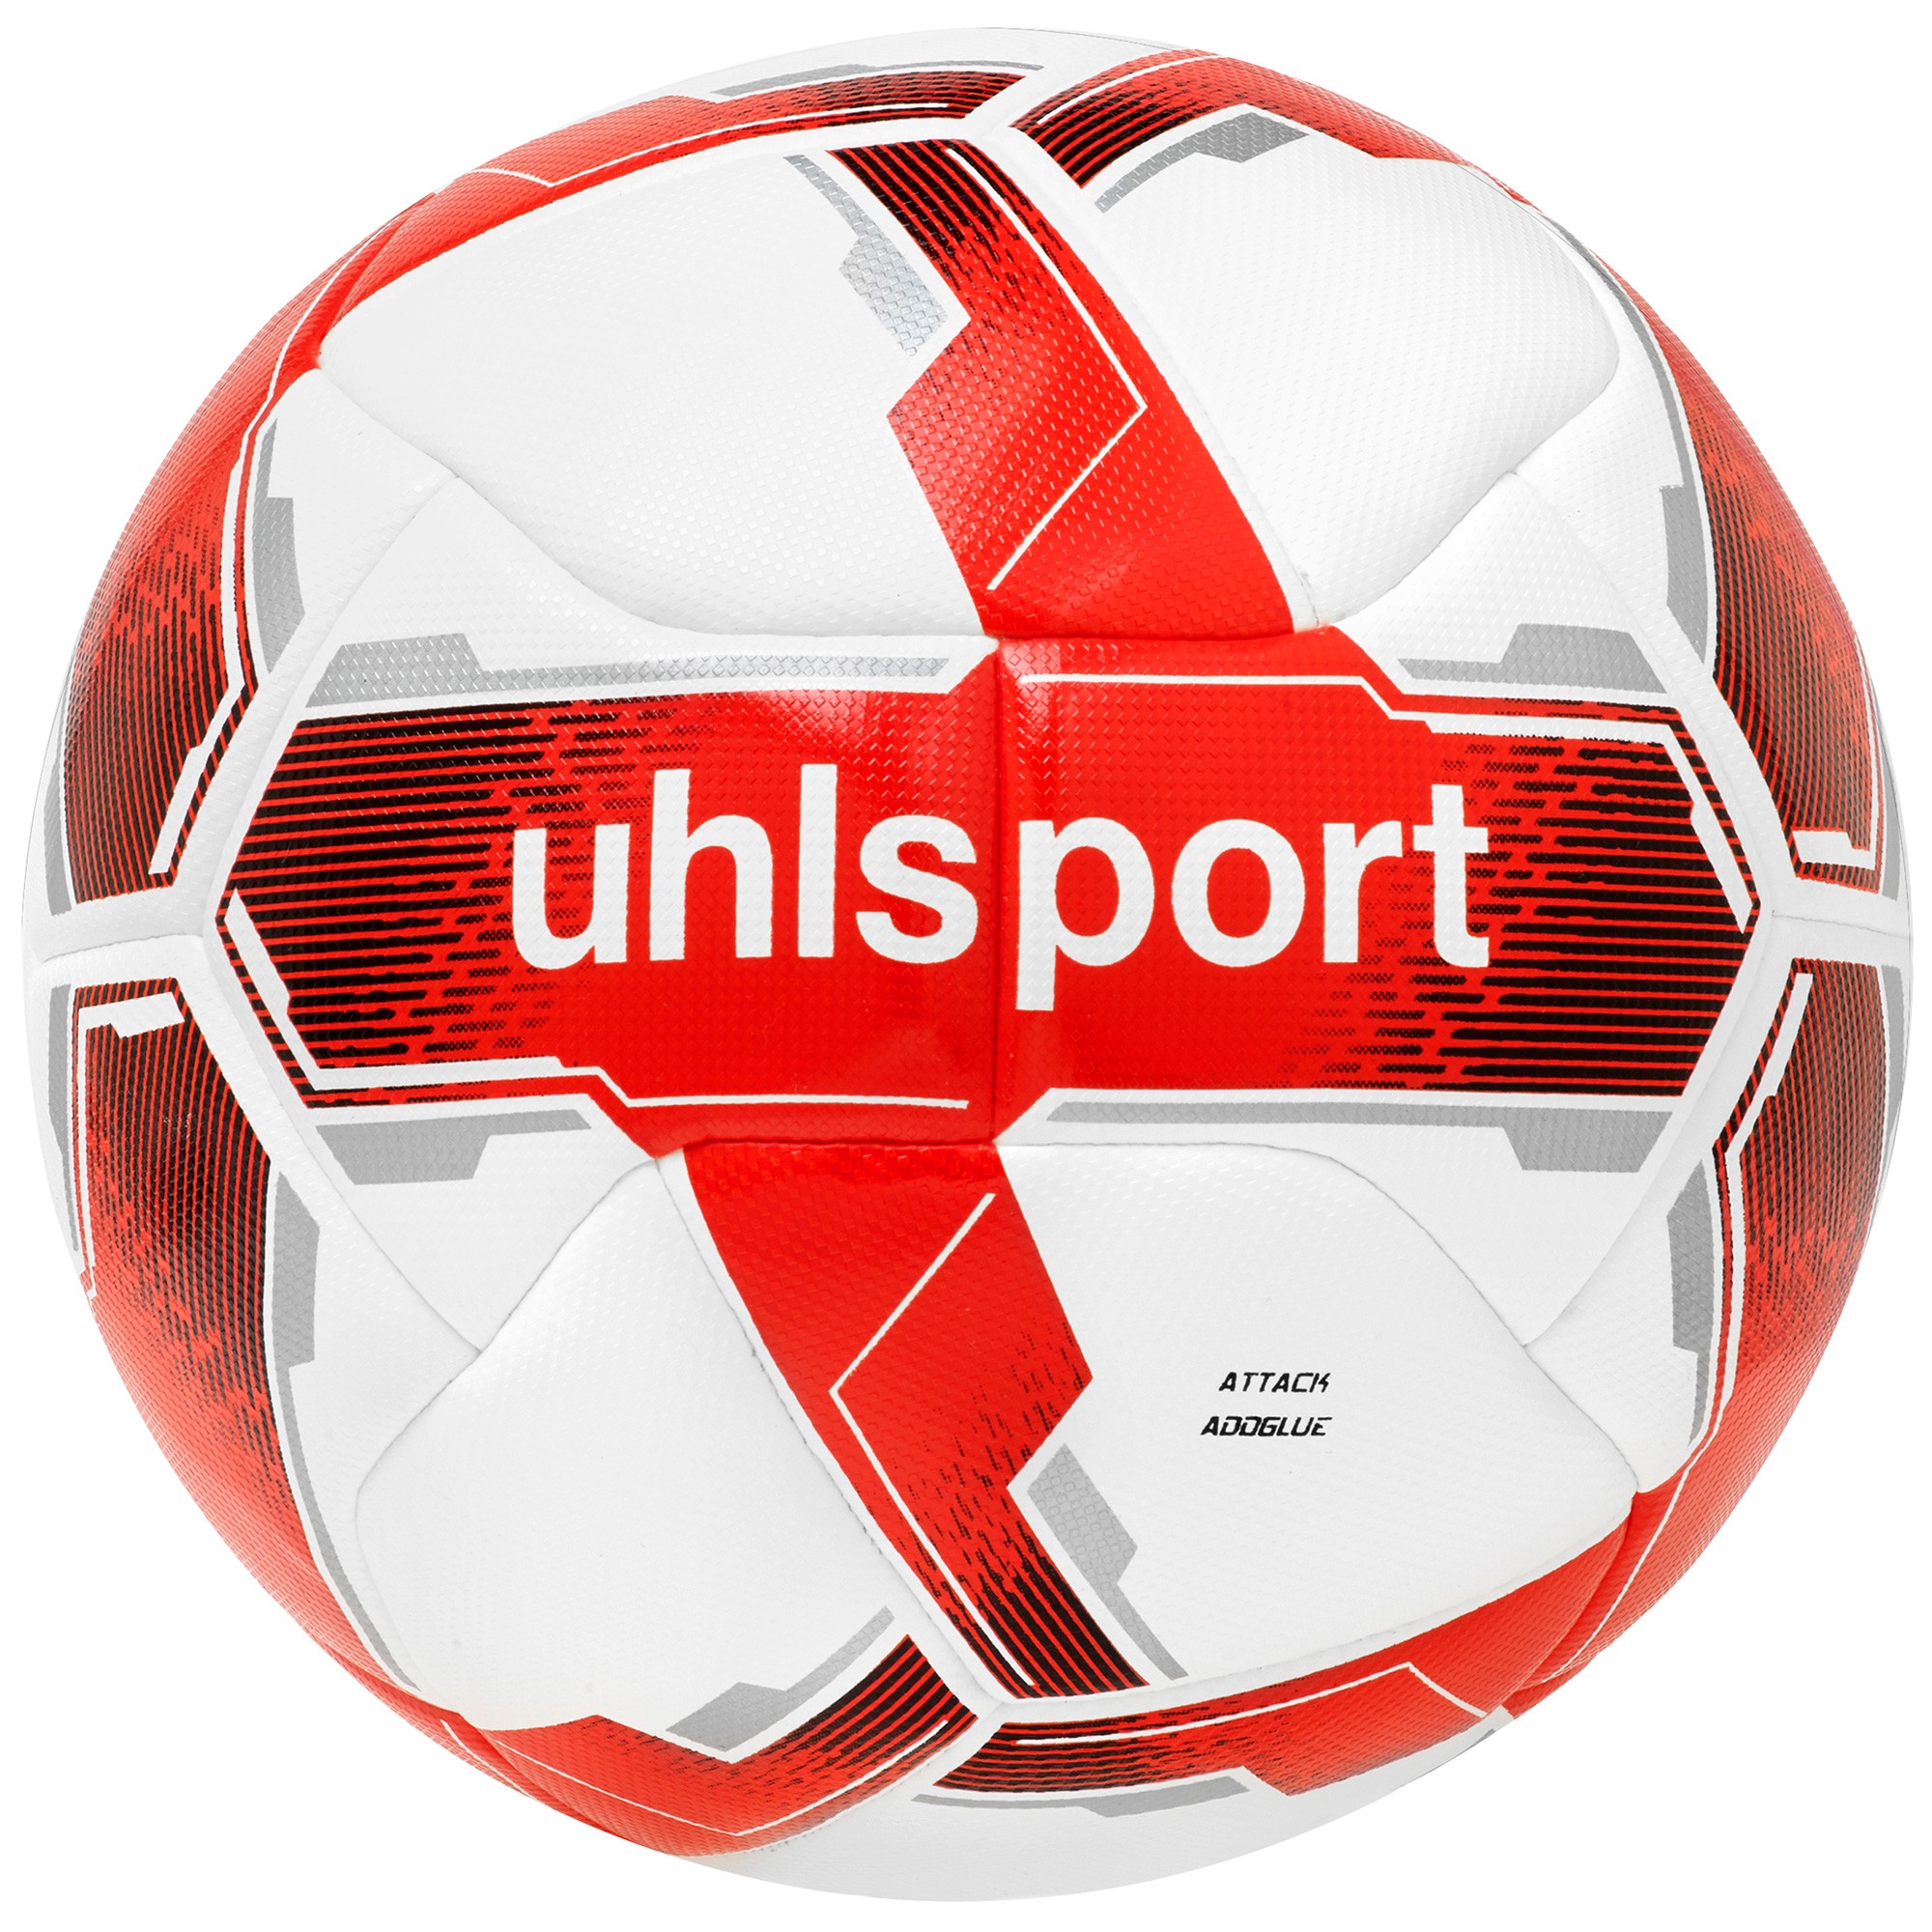 Uhlsport Team (Sz. 5) Ballon D'entraînement